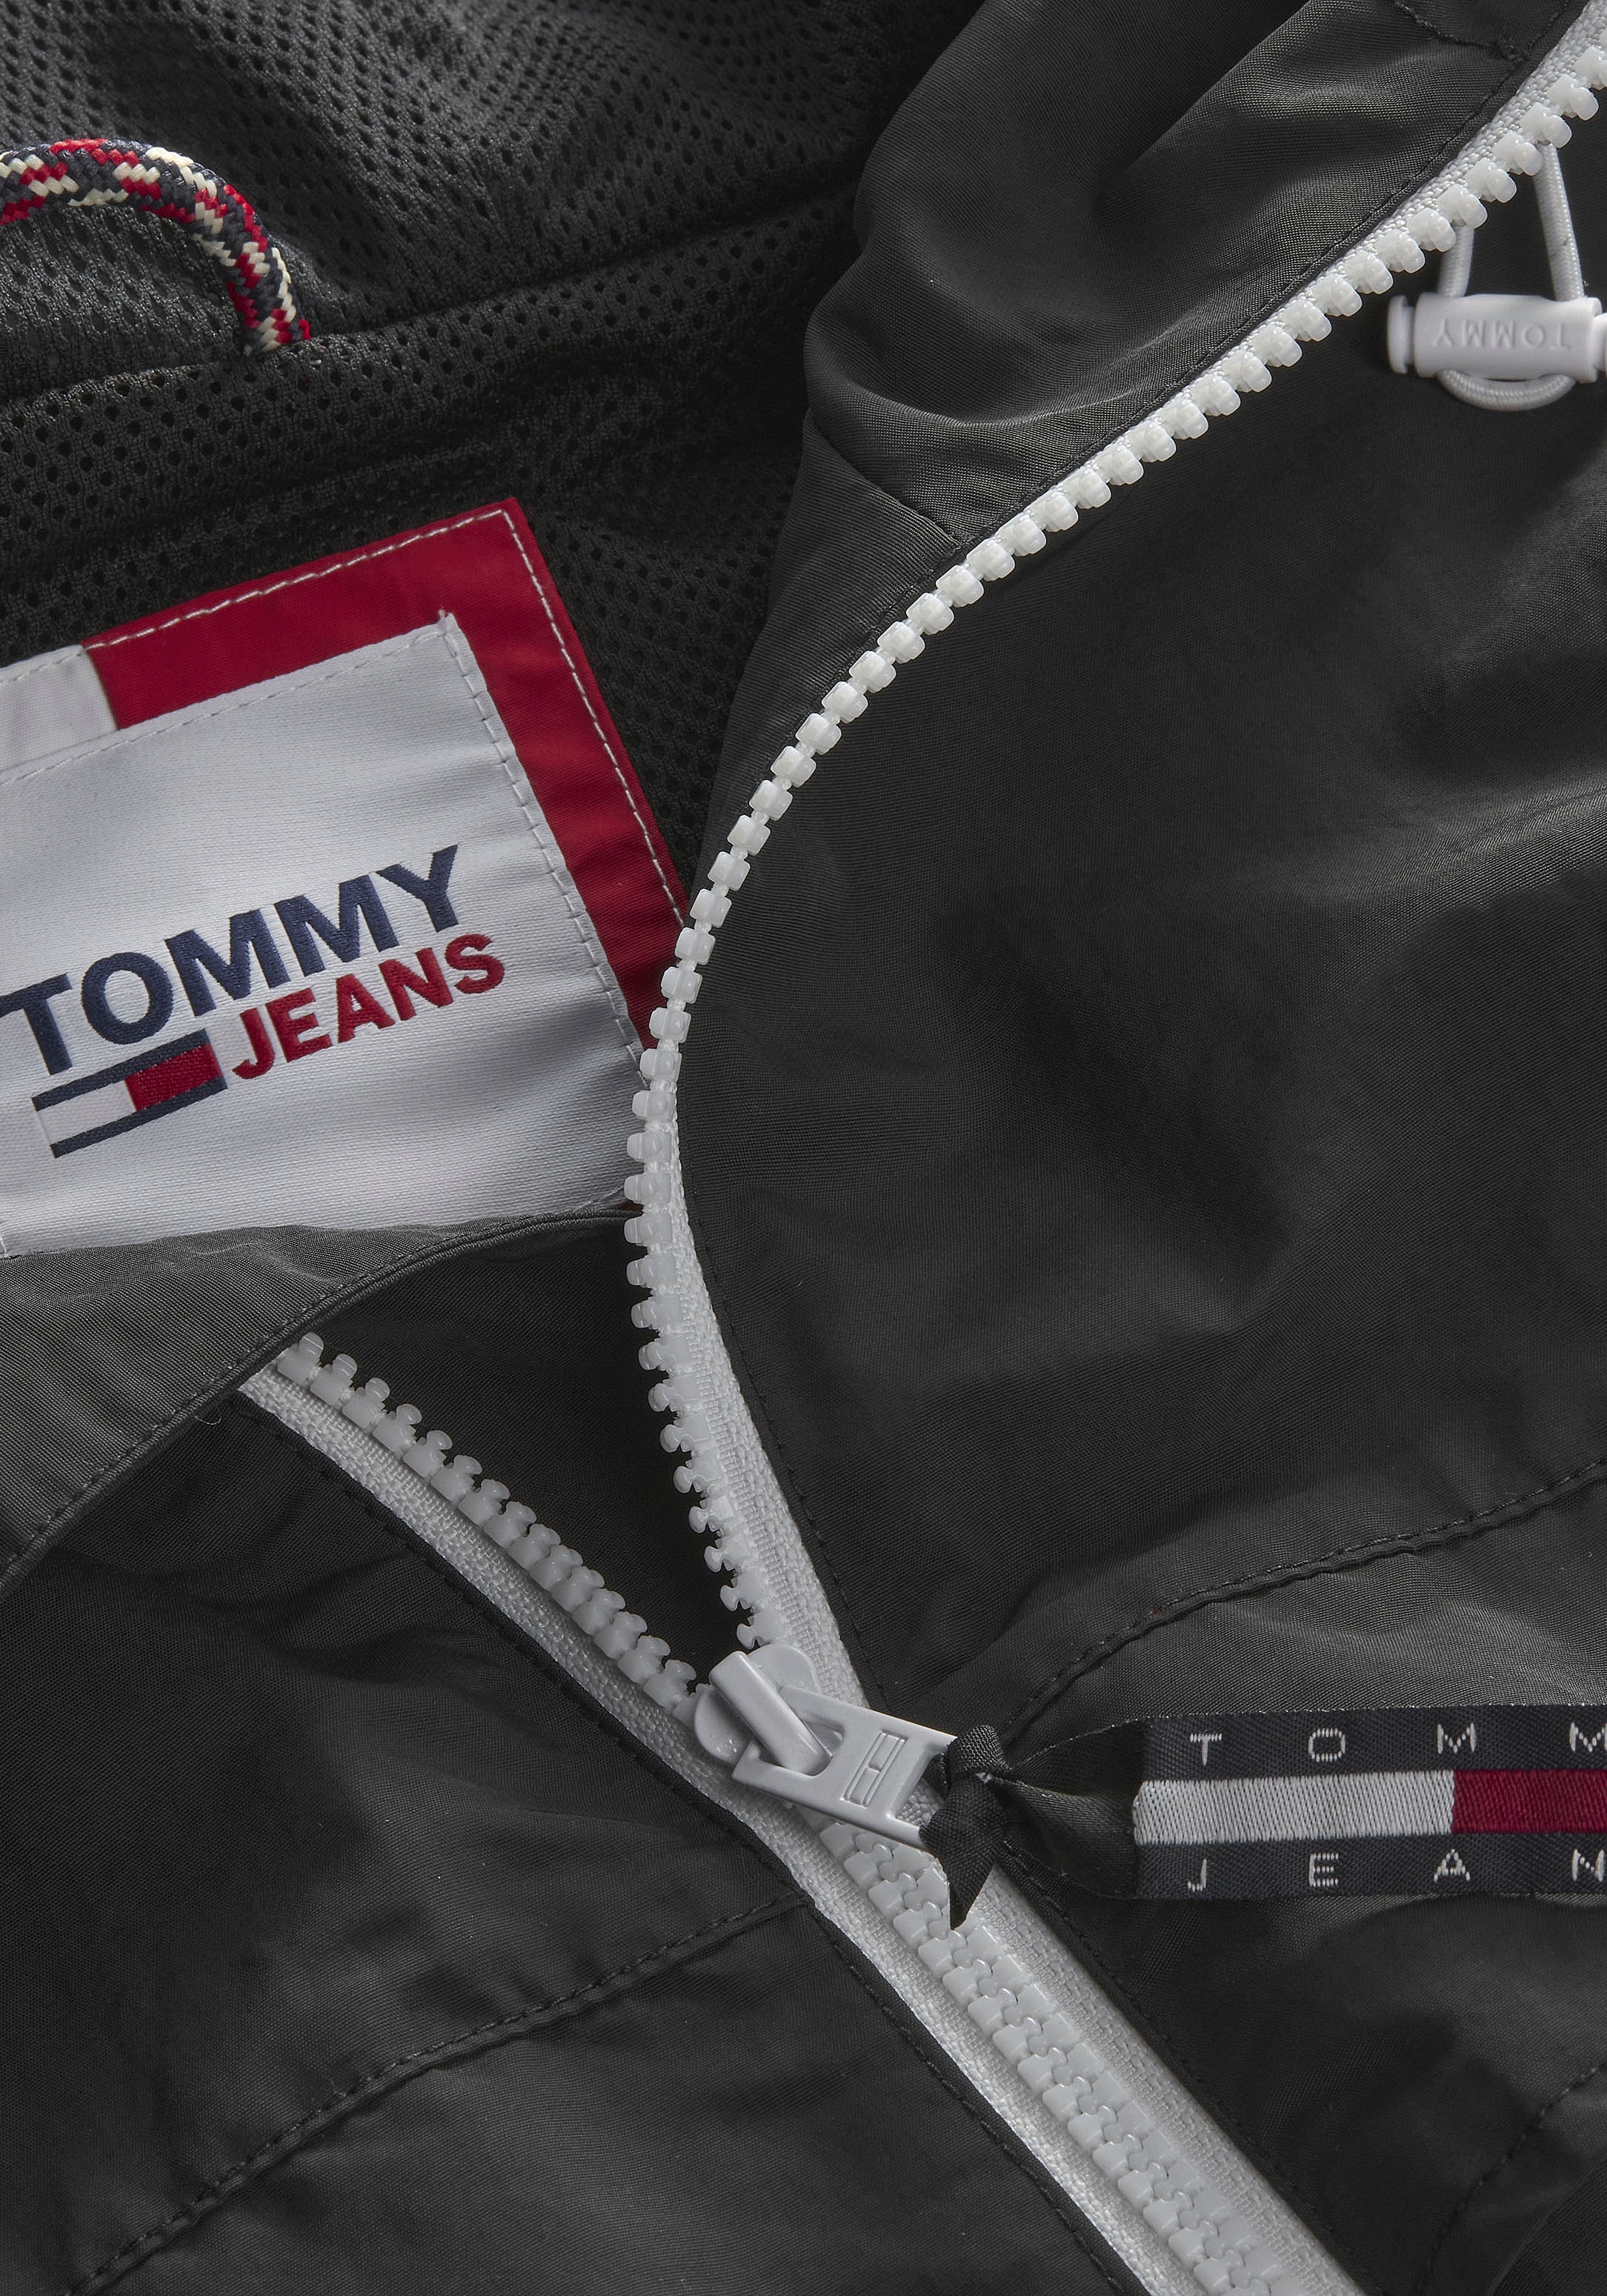 Tommy Jeans bei Logo-Prägung kleiner mit PLUS Plus an Windbreaker Kapuze, WINDBREAKER«, ♕ CHICAGO den Zippern »TJM mit